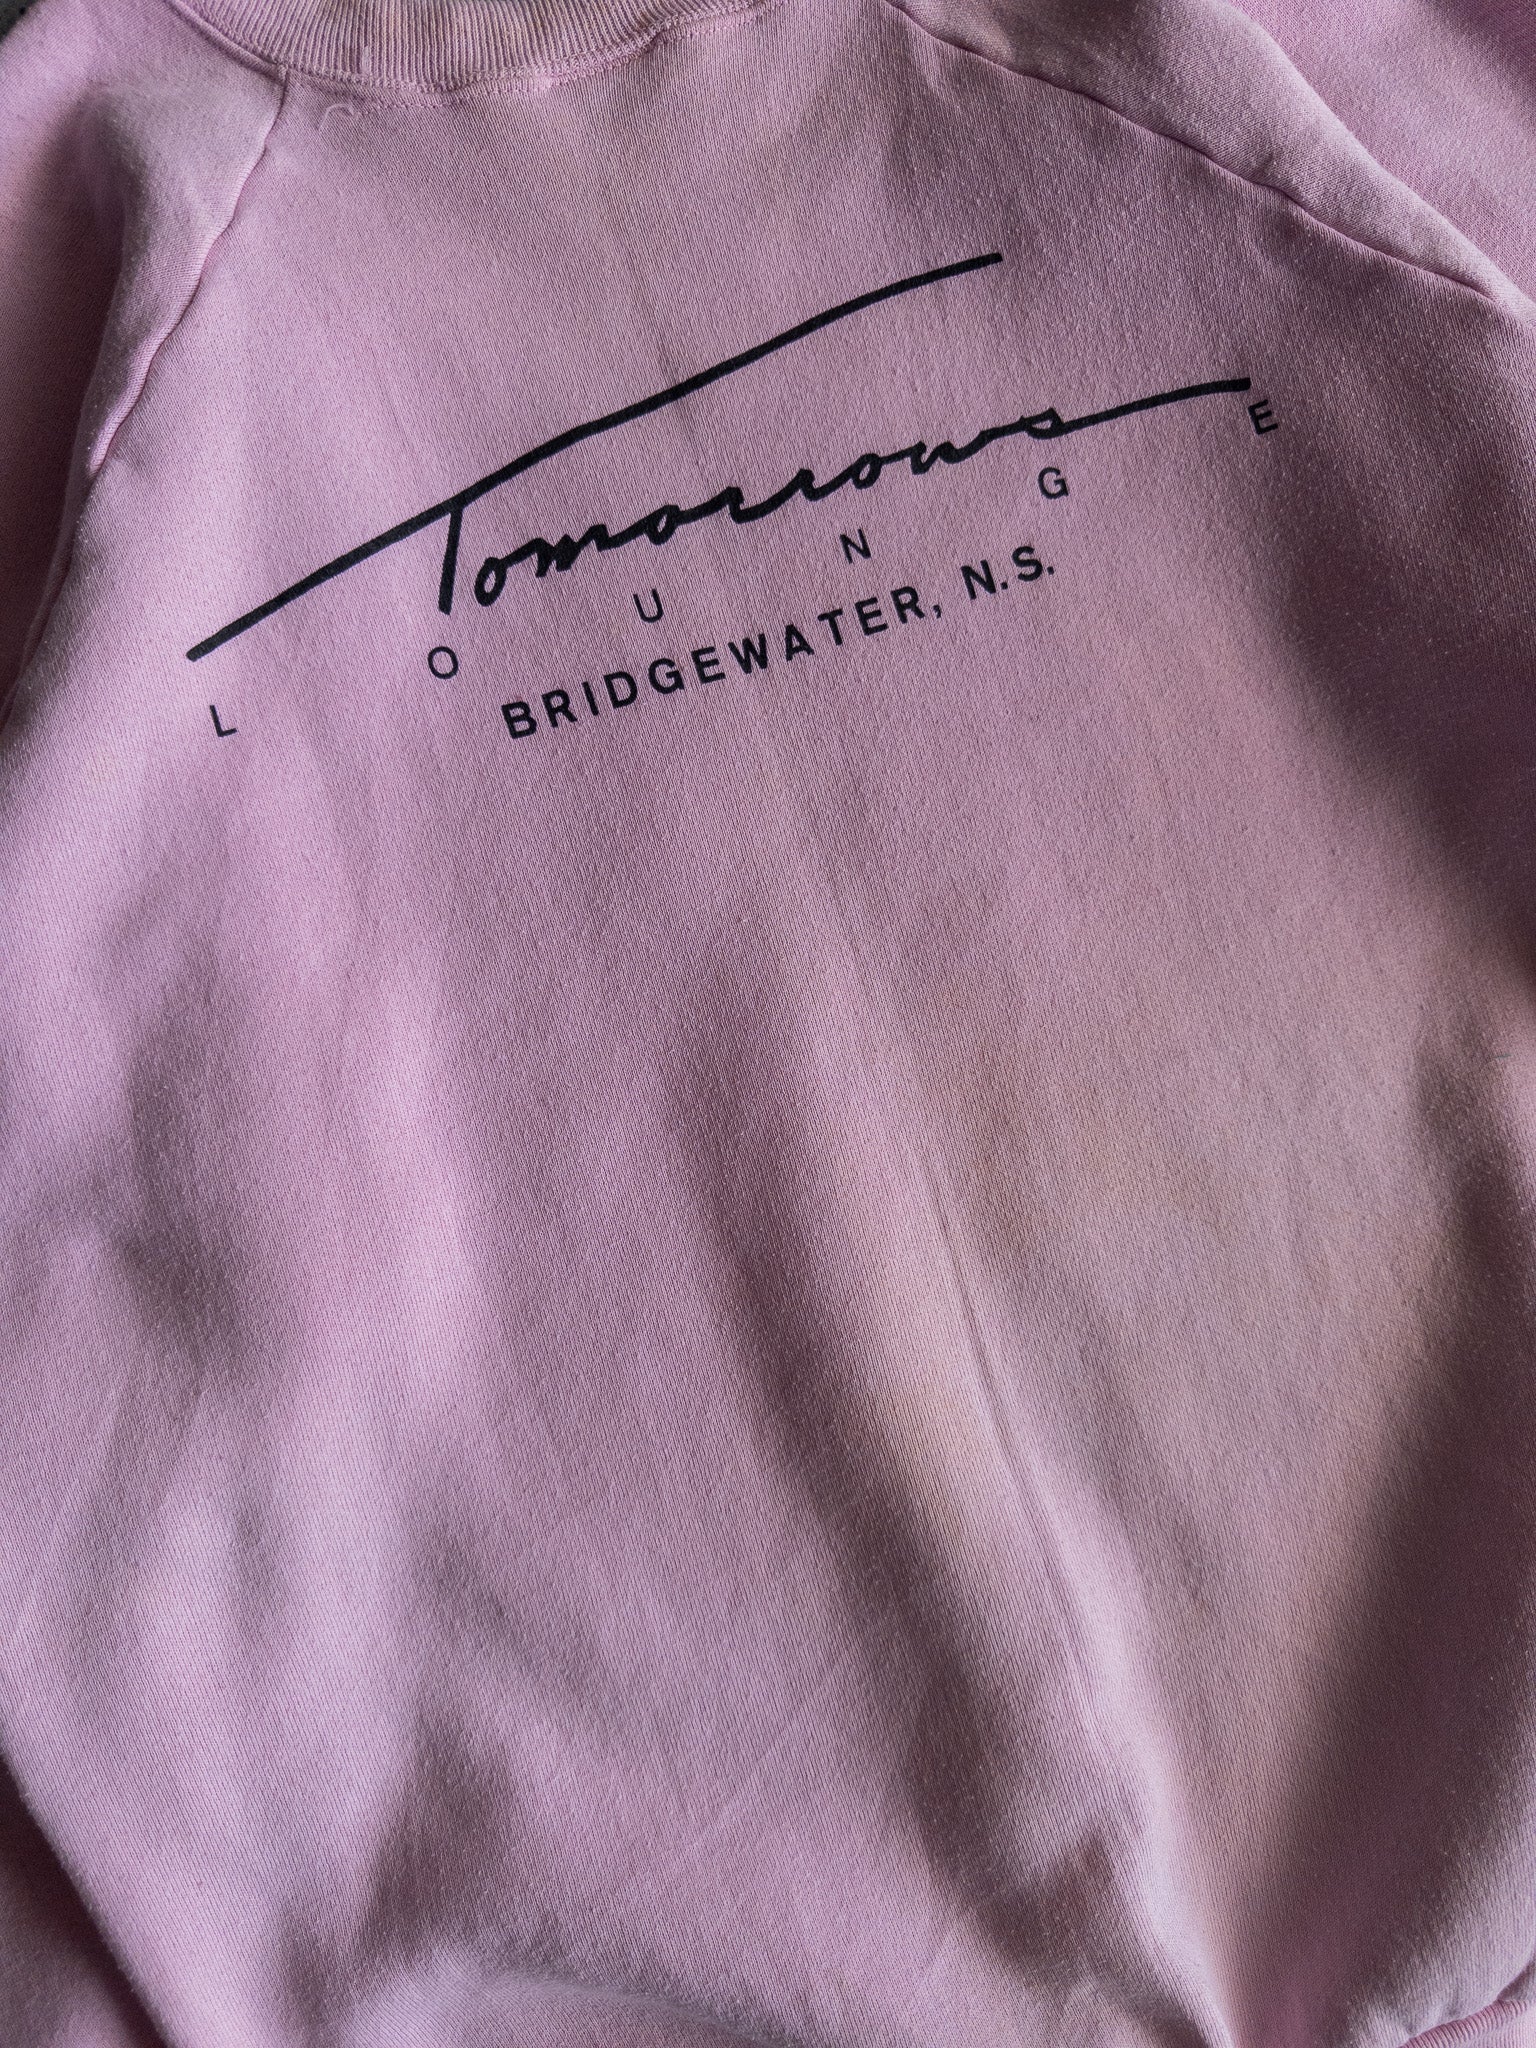 Vintage Tomorrow's Lounge Bridgewater Sweatshirt (XL)